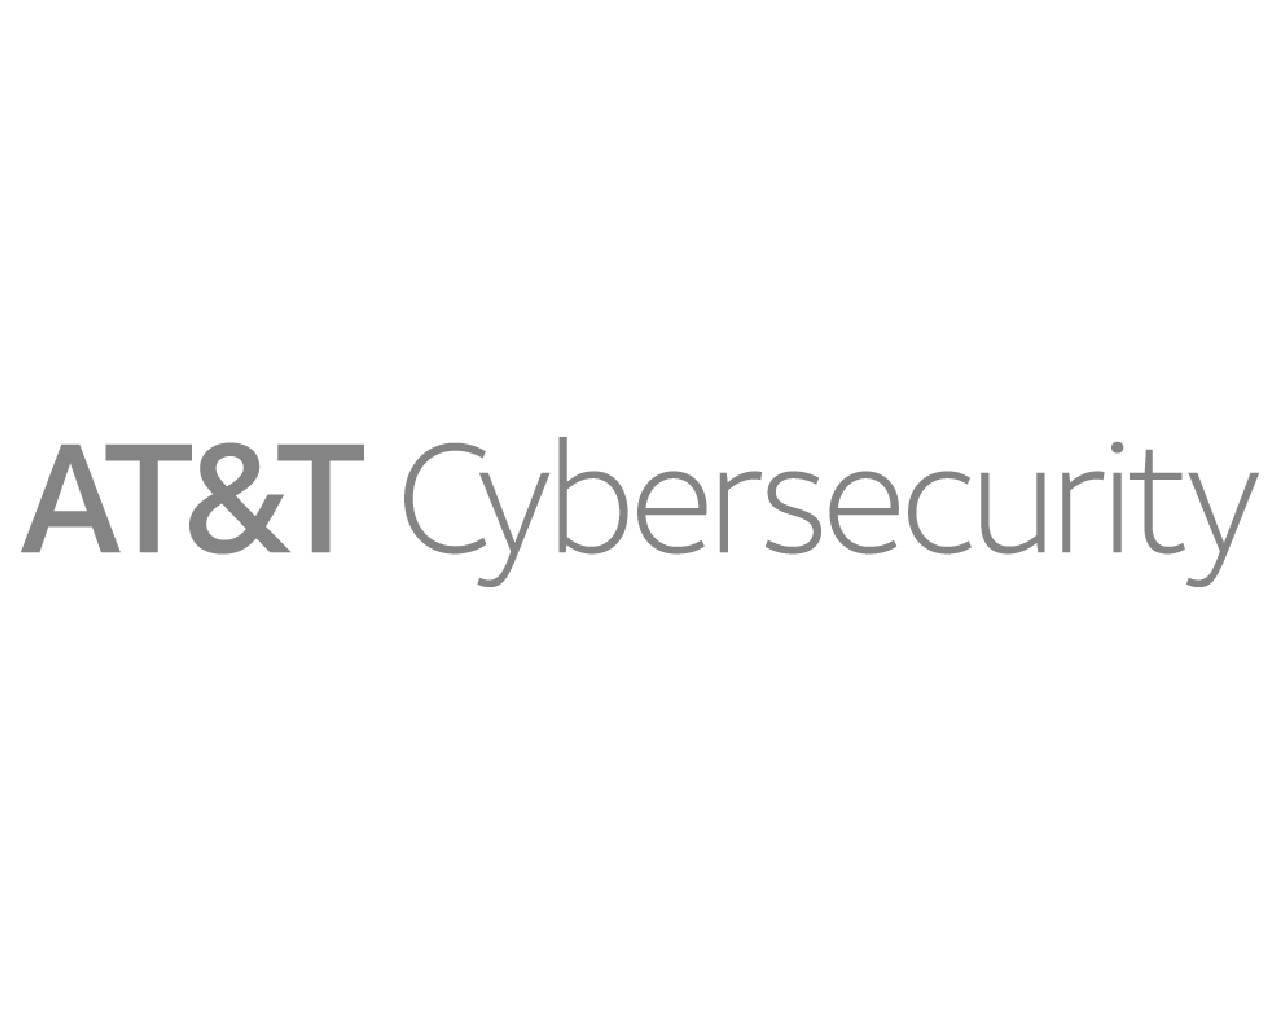 att cybersecurity logo